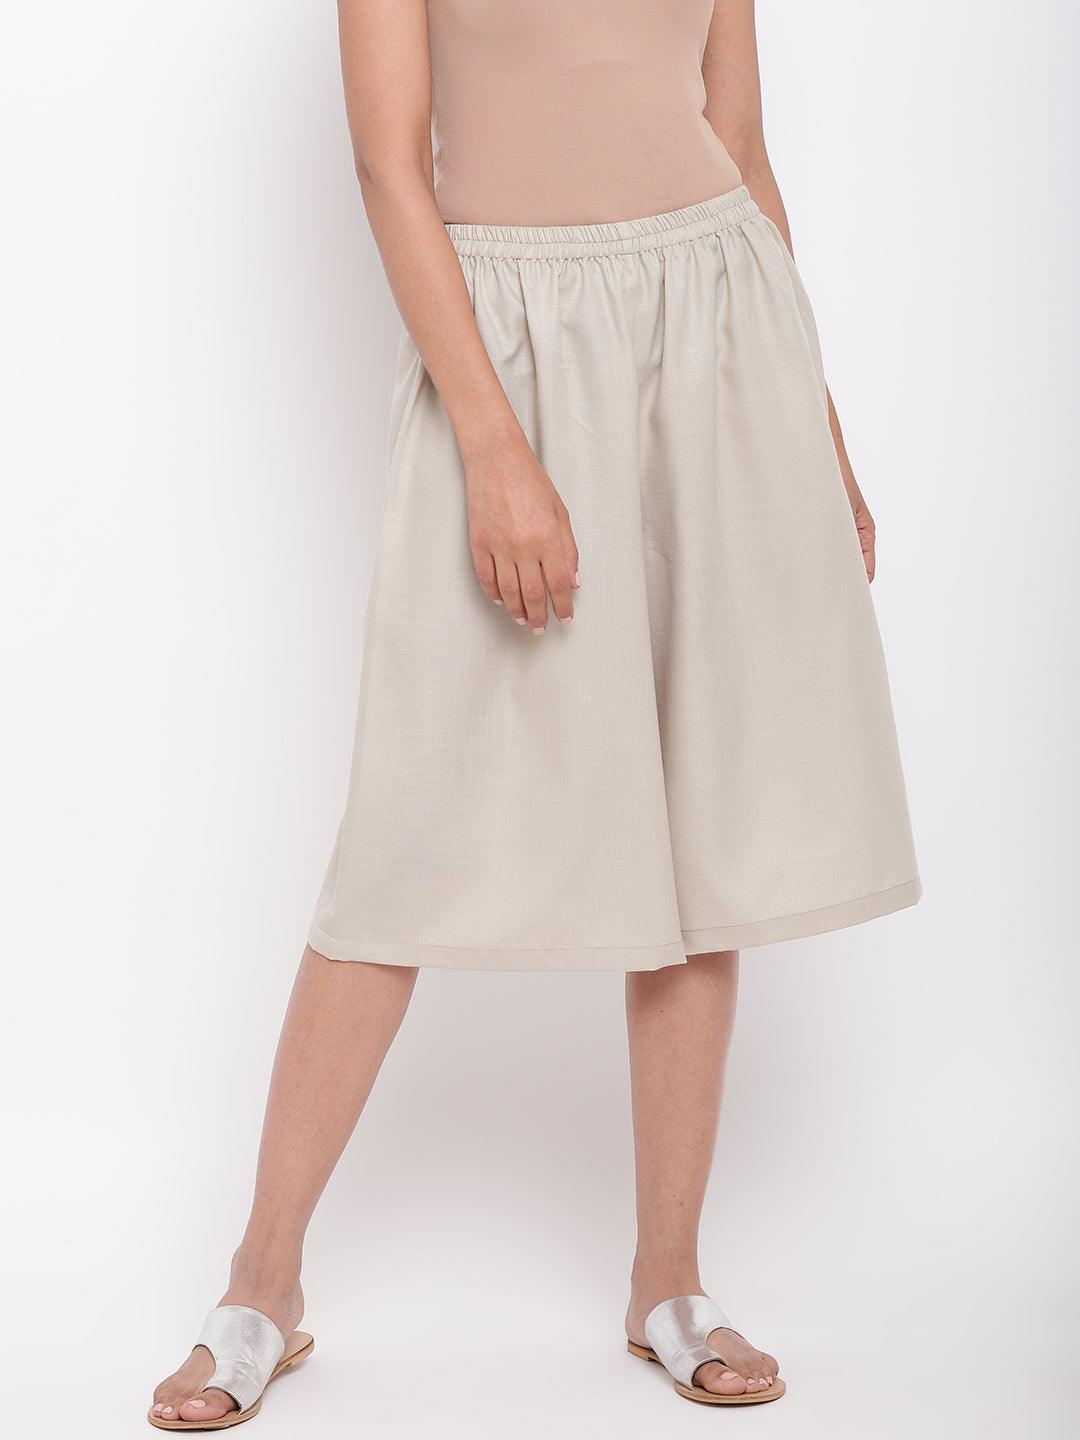 Linen Cotton Grey Pant - trueBrowns